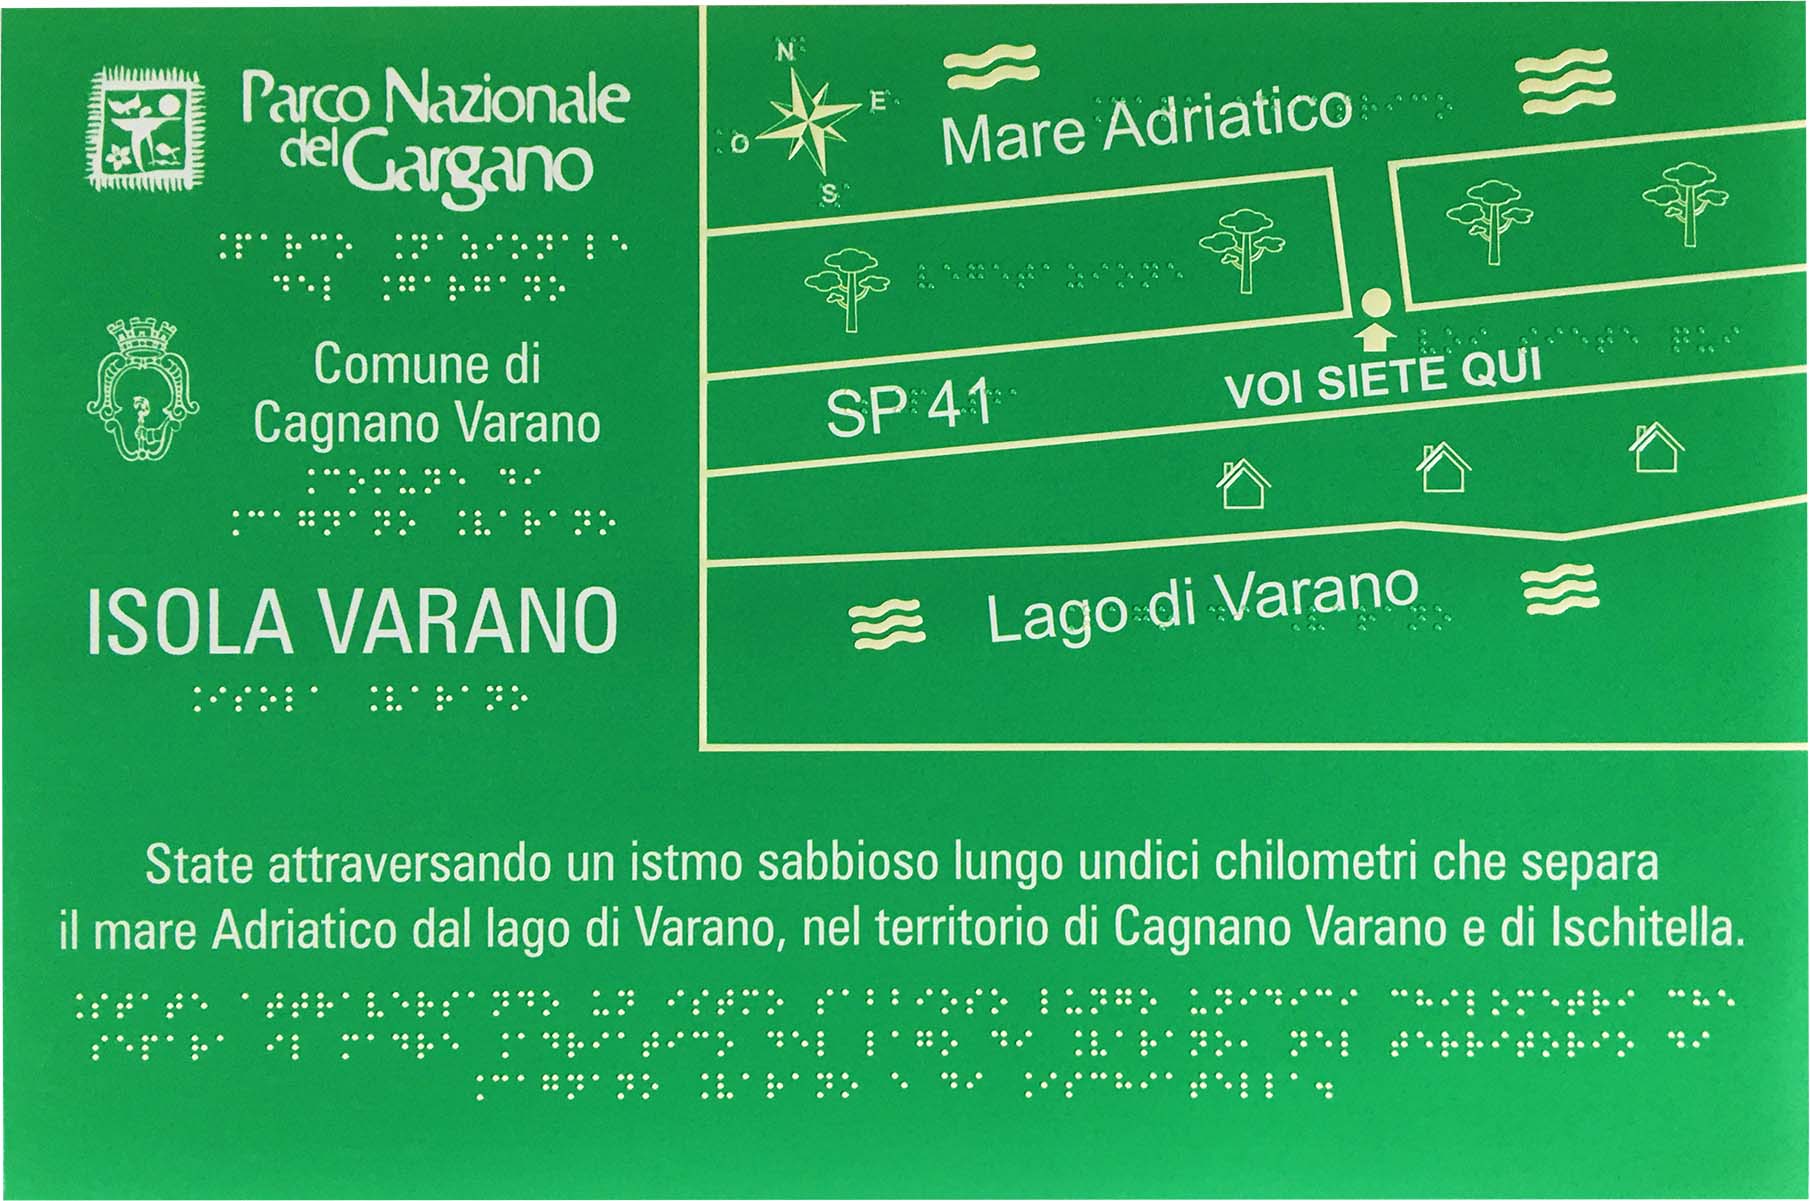 Mappa tattile - Parco Nazionale Gargano